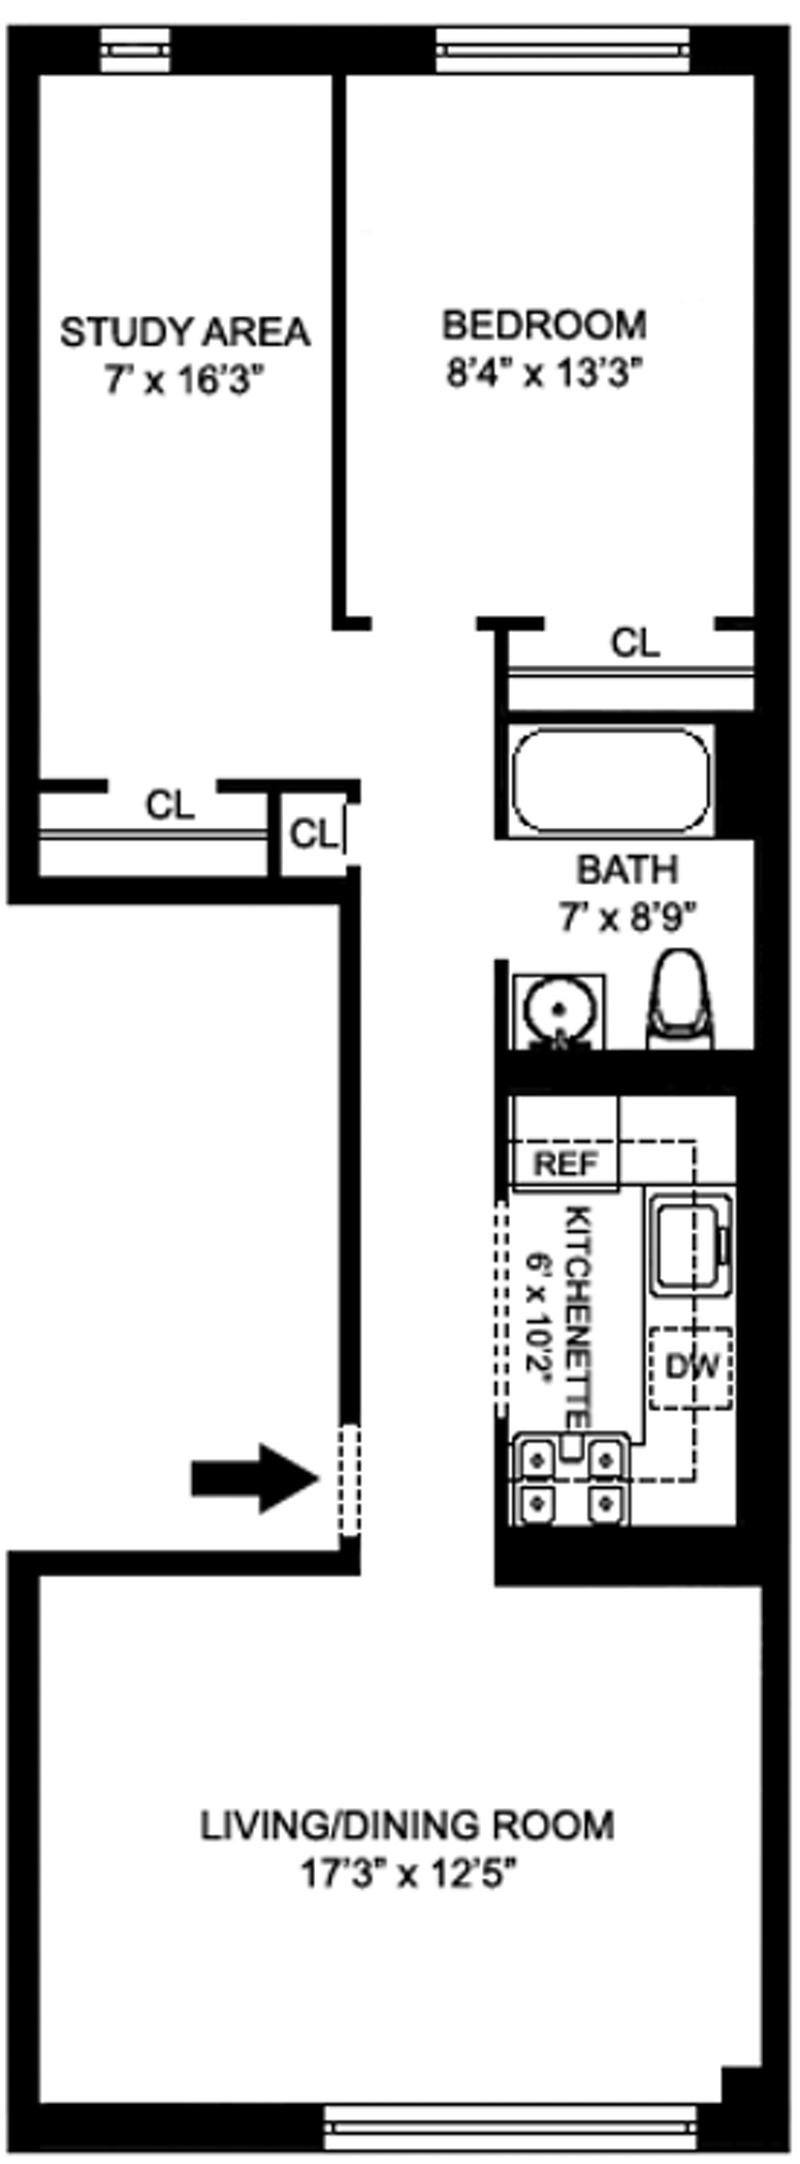 Floorplan for 115 West 126th Street, 2